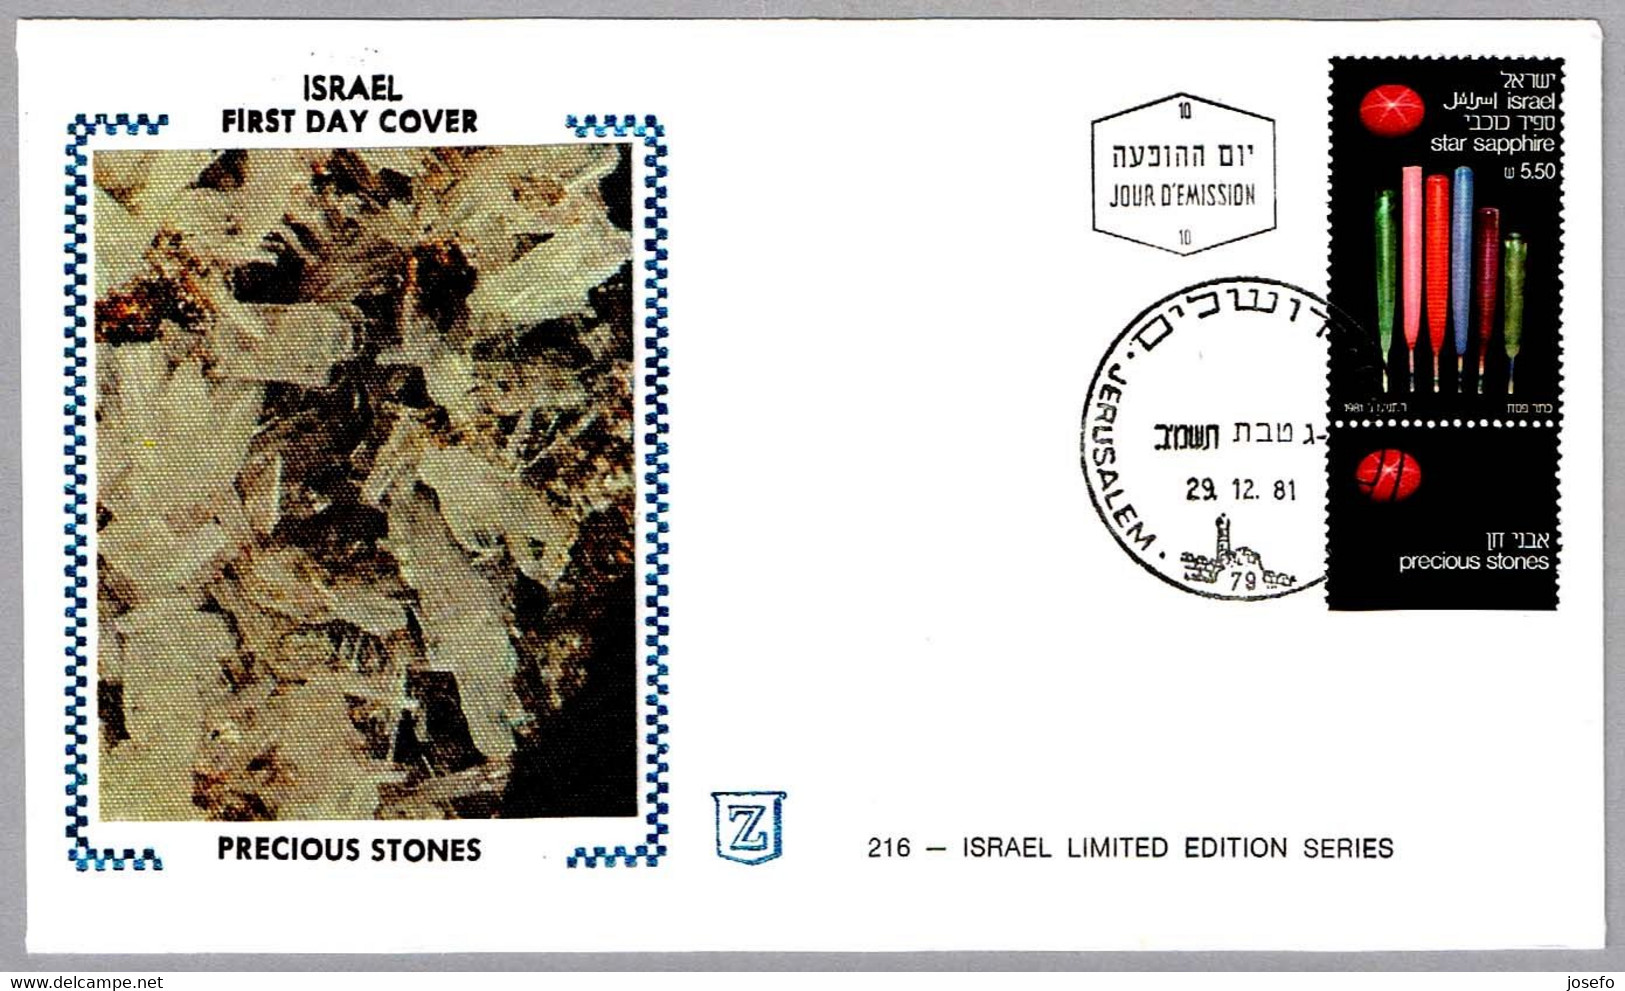 PIEDRAS PRECIOSAS: ZAFIRO ESTRELLA - STAR SAPPHIRE. FDC Jerusalem 1981 - Minéraux